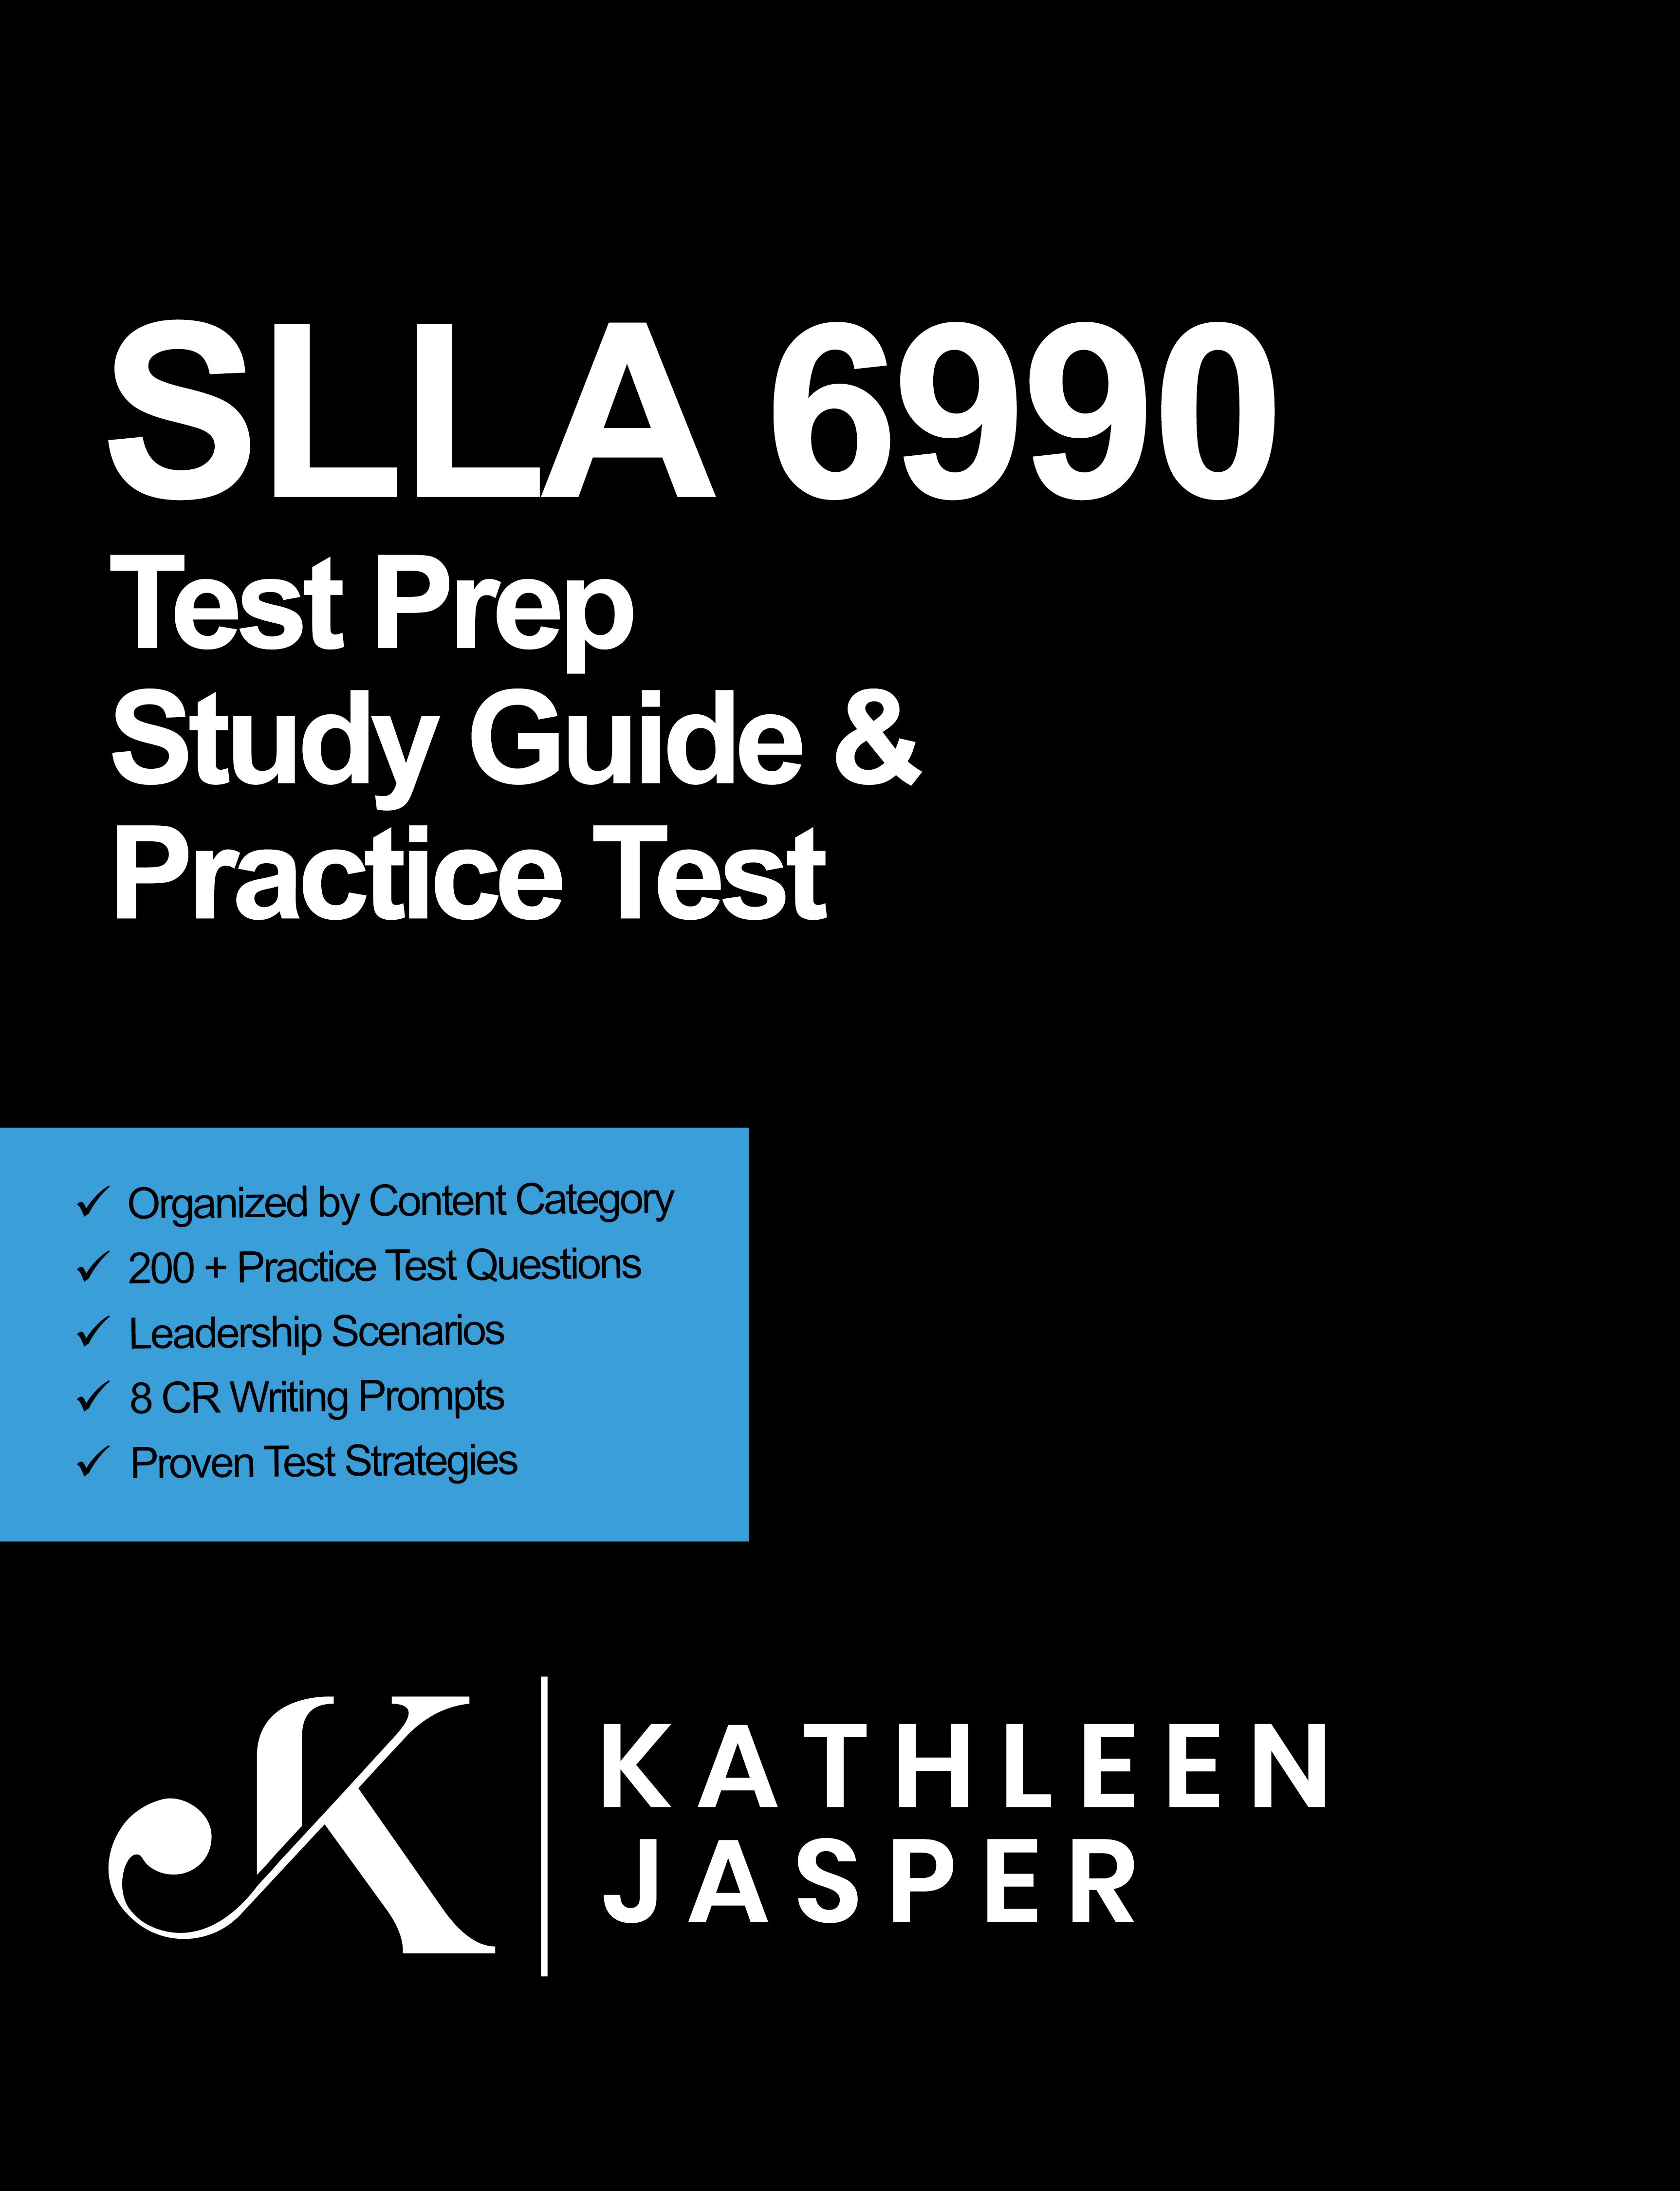 SLLA 6990 Study Guide - Digital